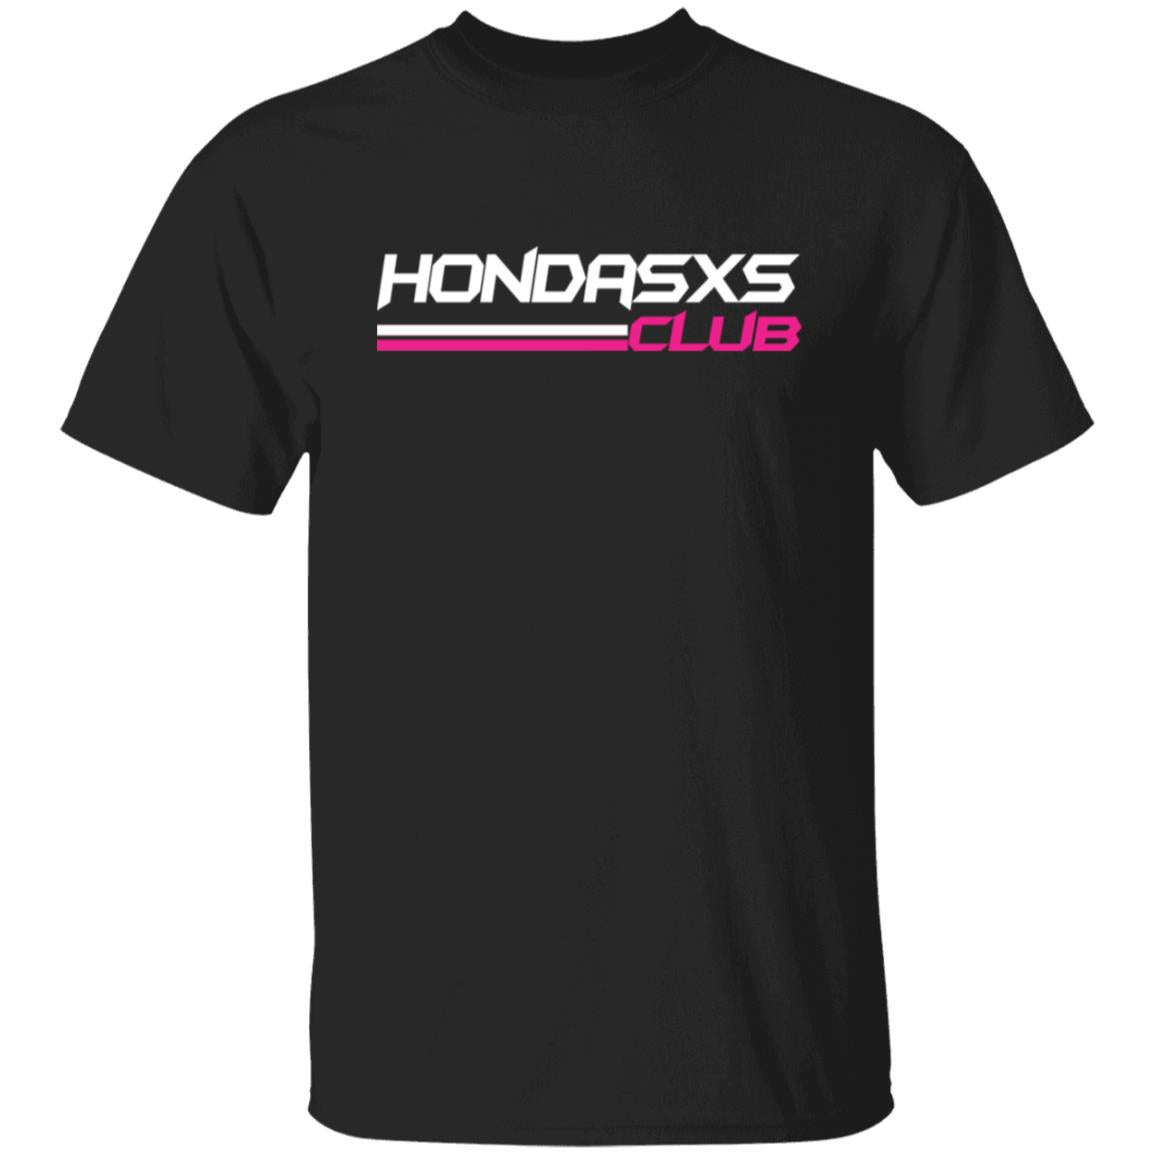 HondaSxS Club Pink Line T-Shirt